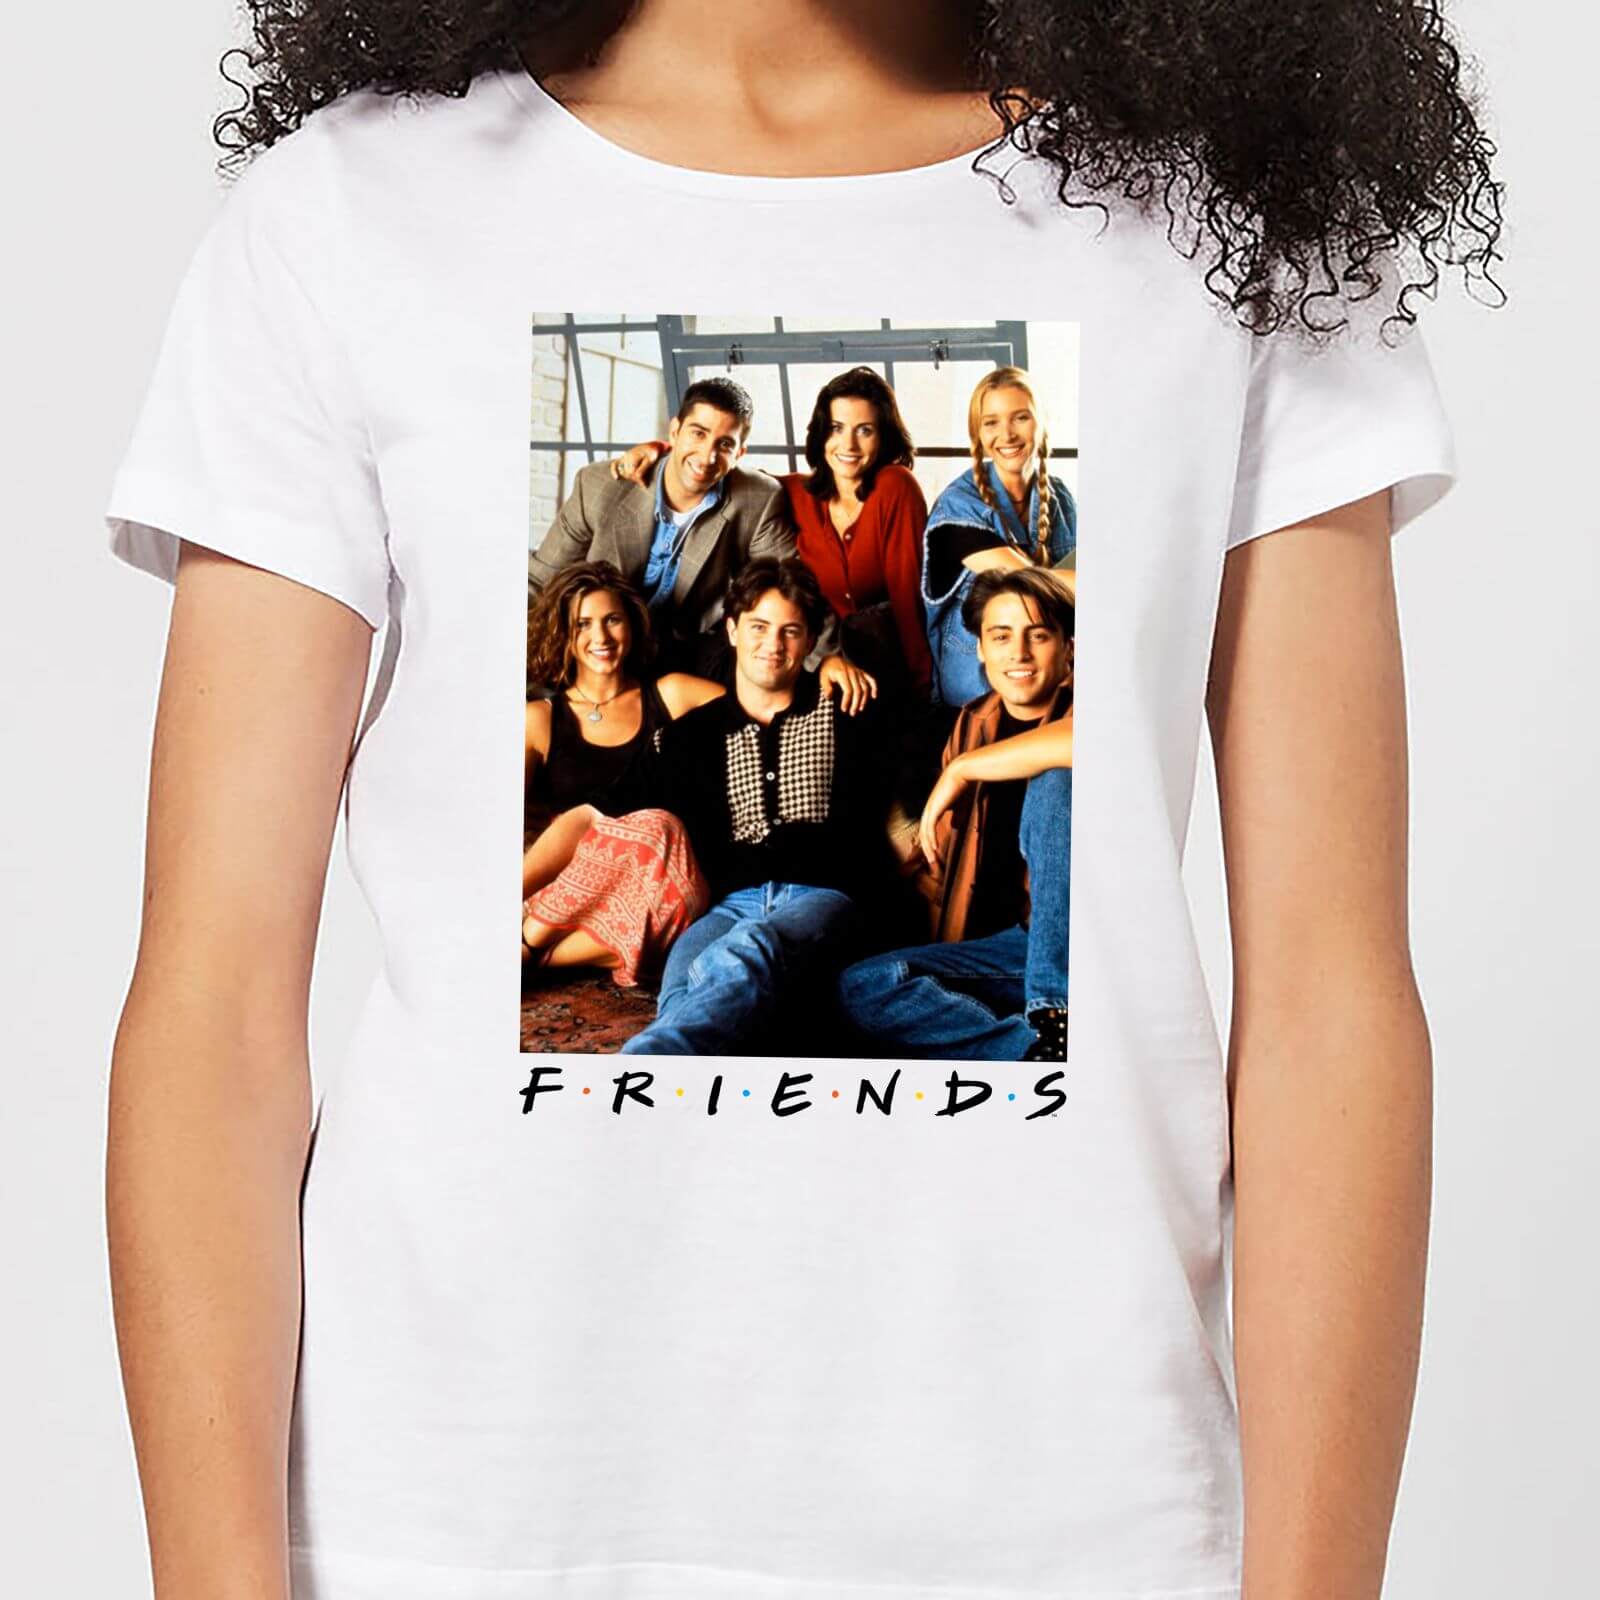 Friends Group Photo Women's T-Shirt - White - S